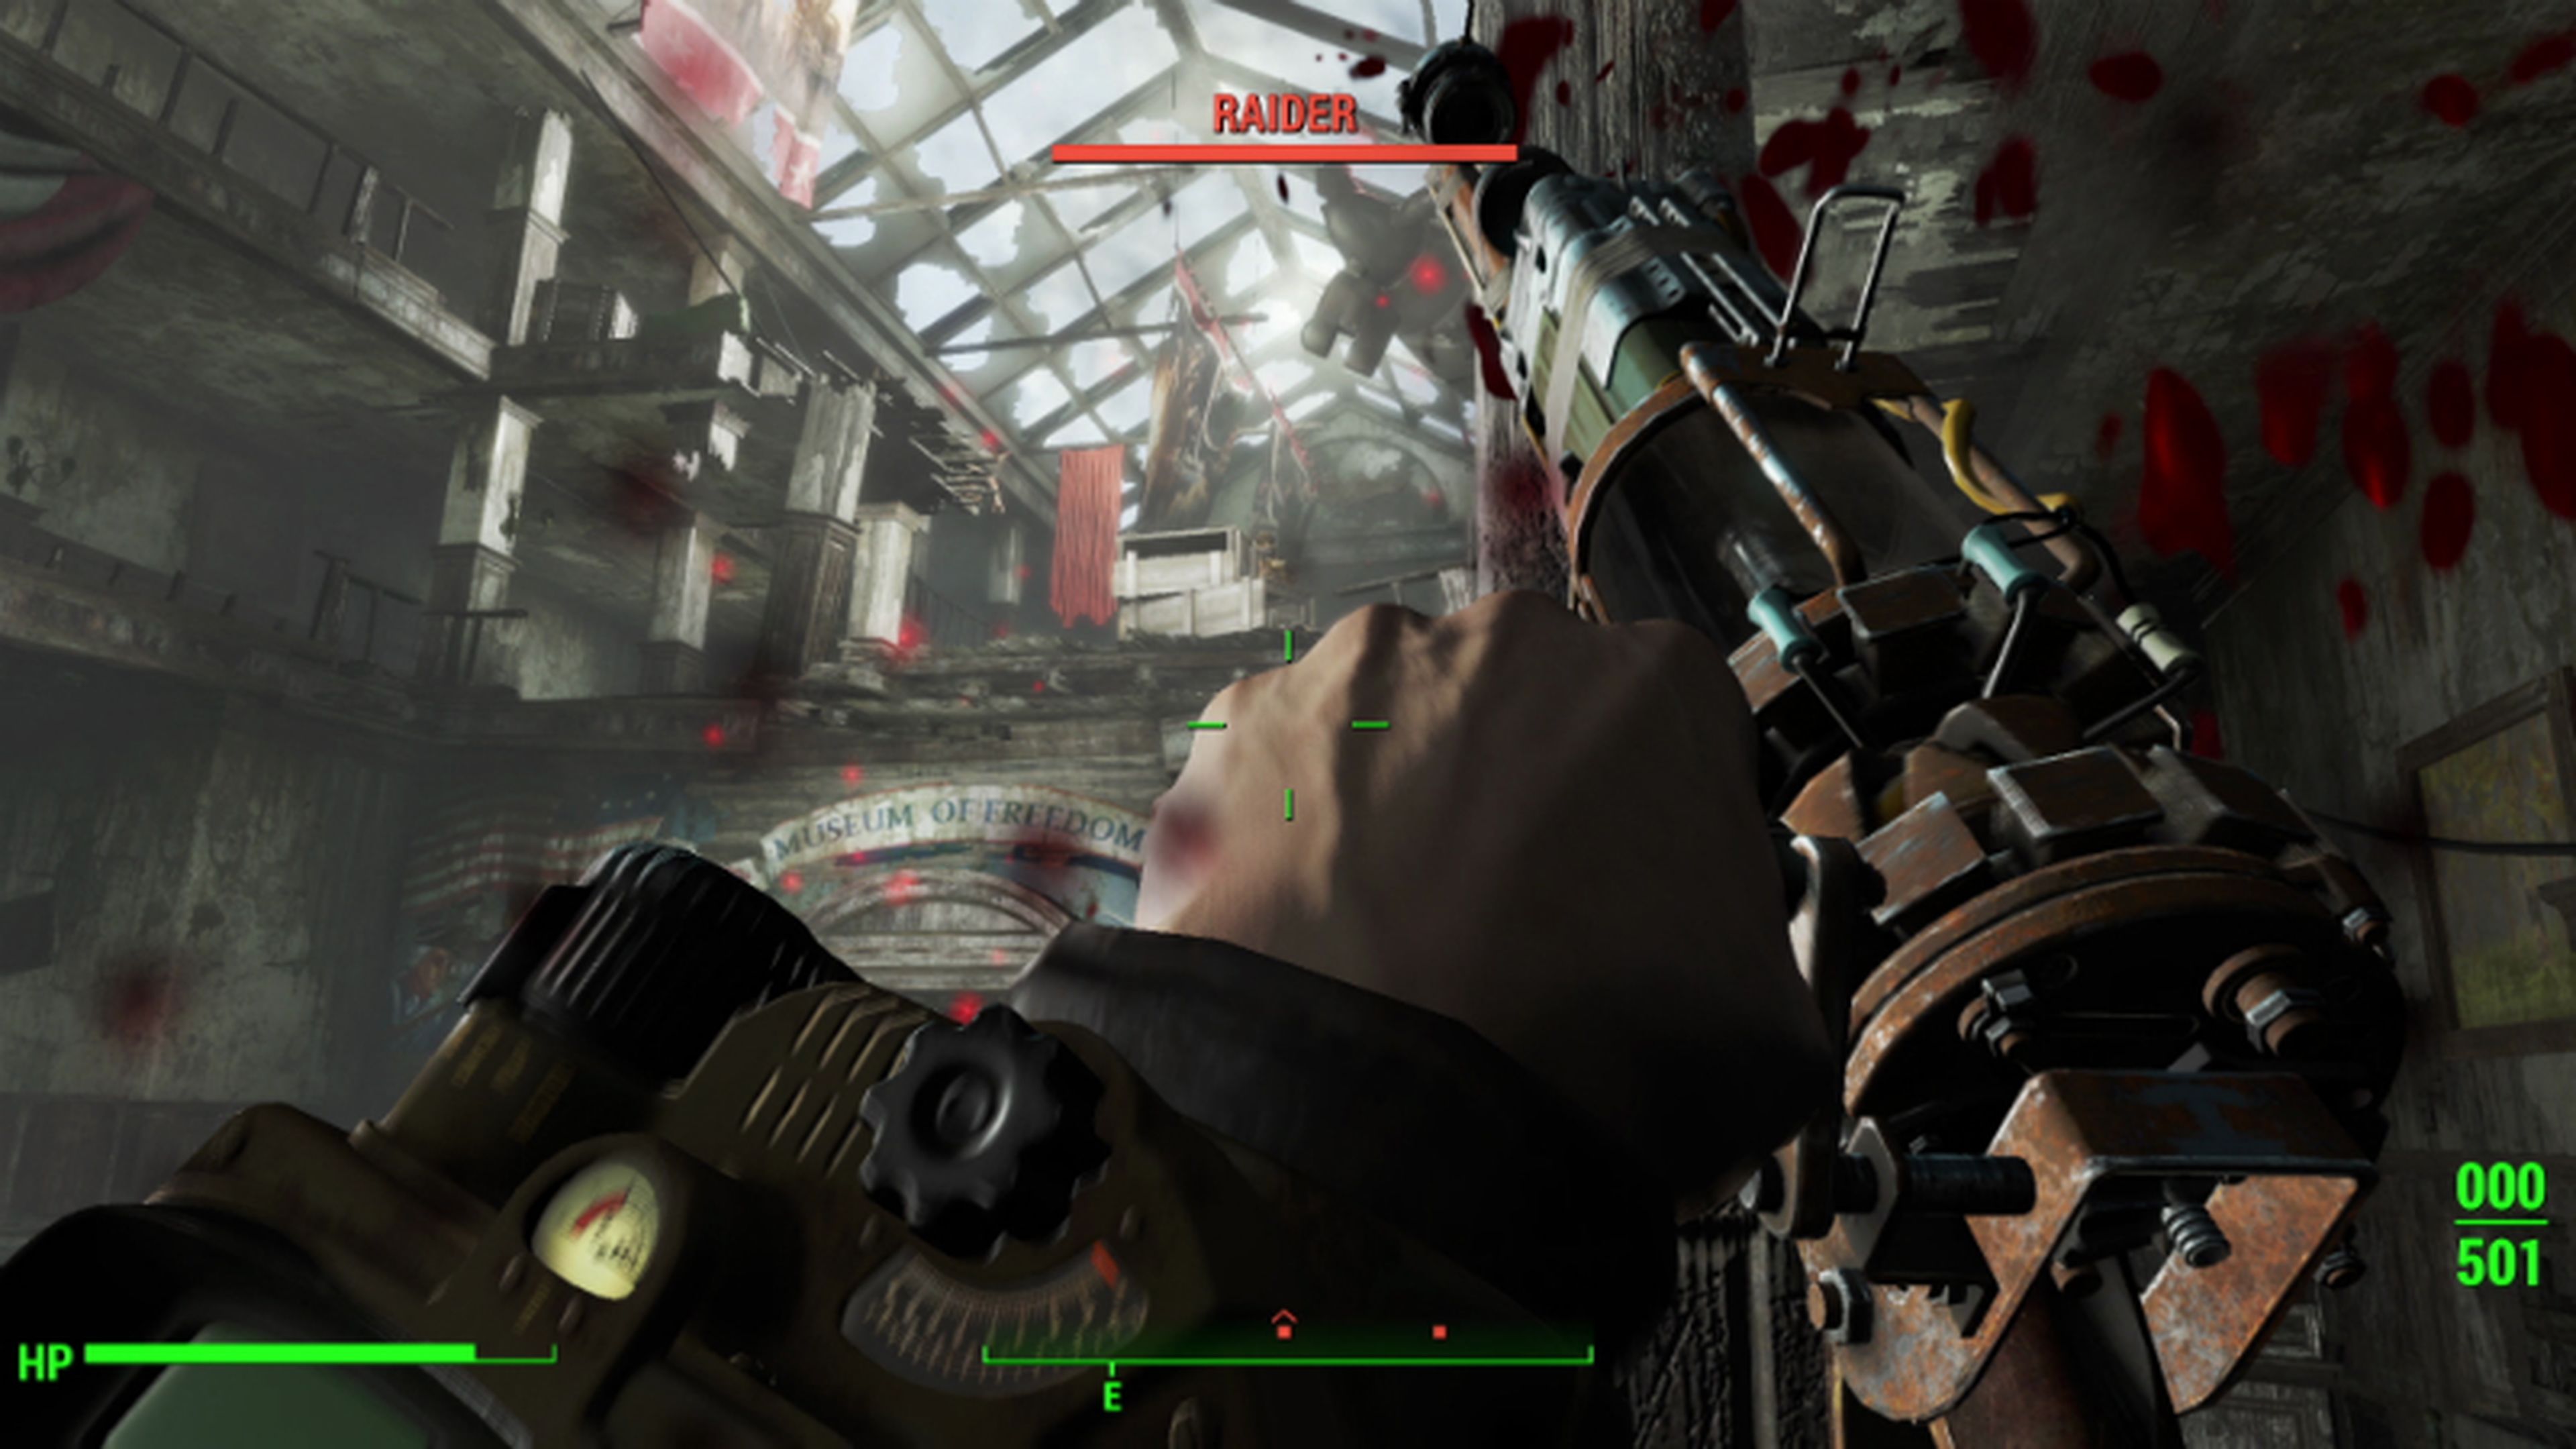 Fallout 4, Bethesda promete una libertad casi ilimitada